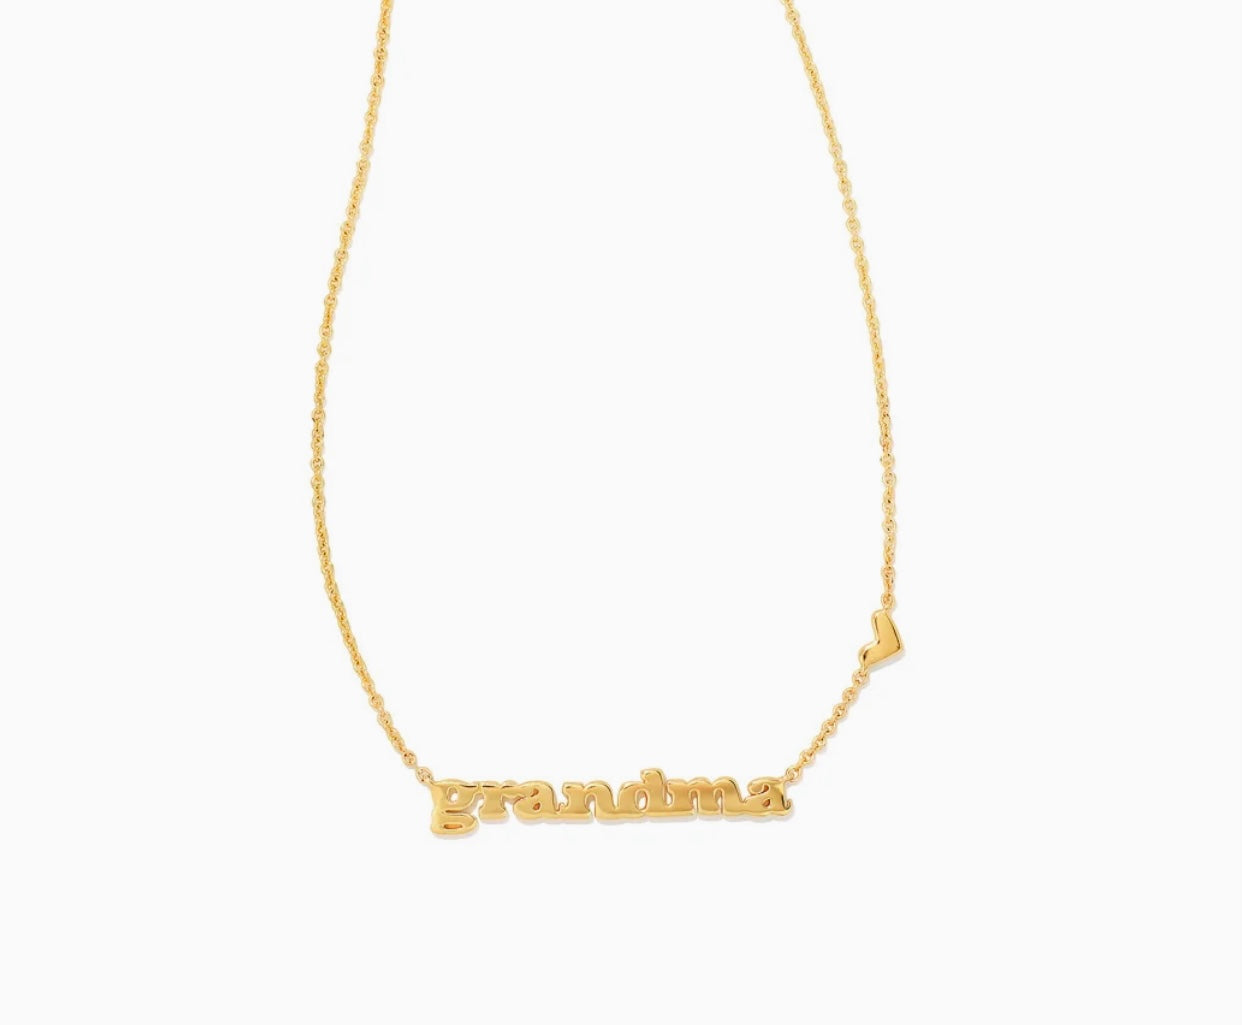 Grandma Pendant Necklace